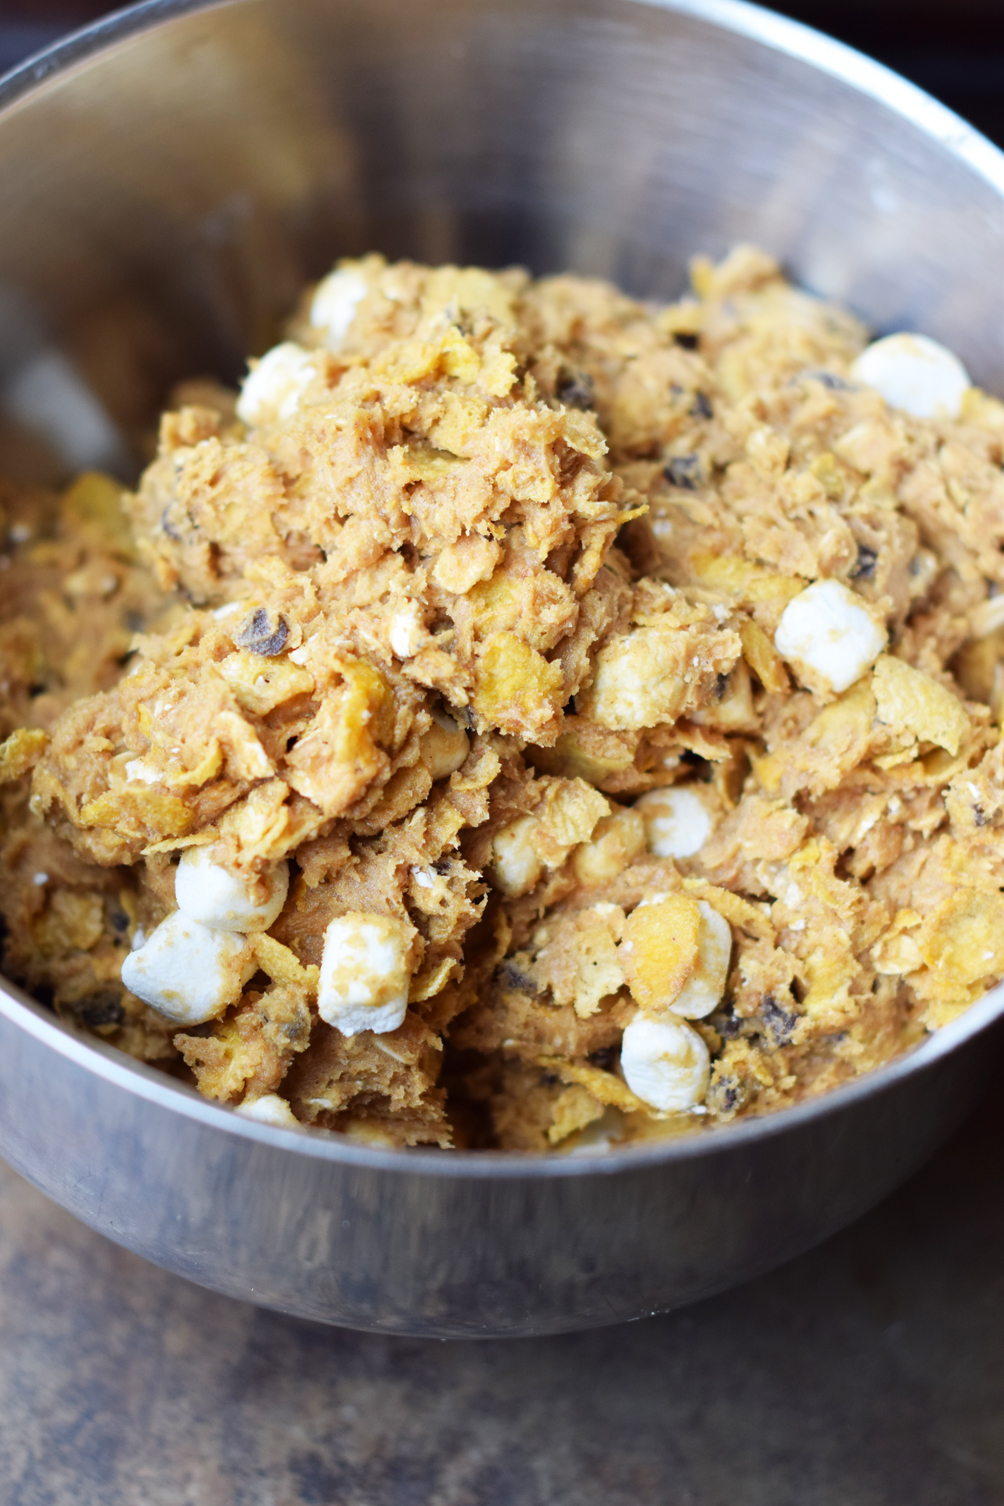 momofuku cornflake marshmallow cookies recipe - one brass fox